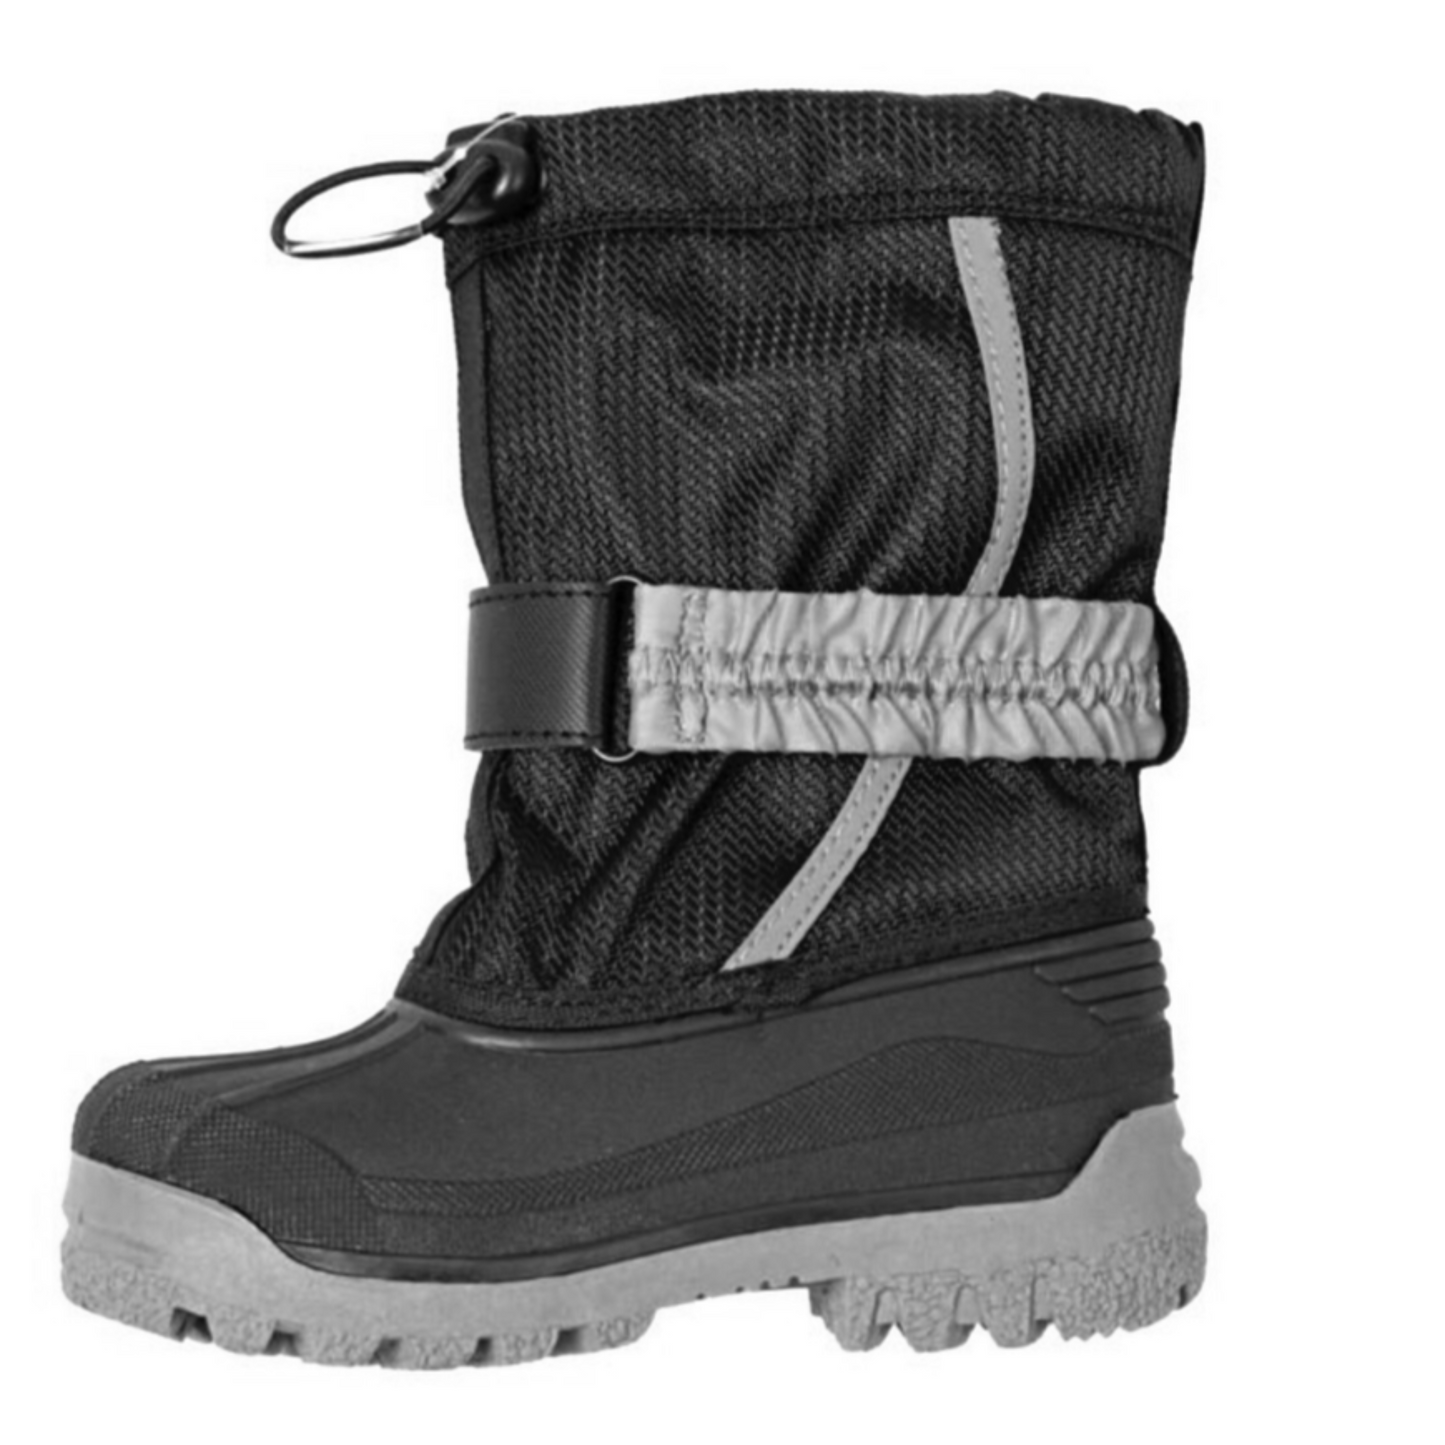 ASH - Black Winter Boots